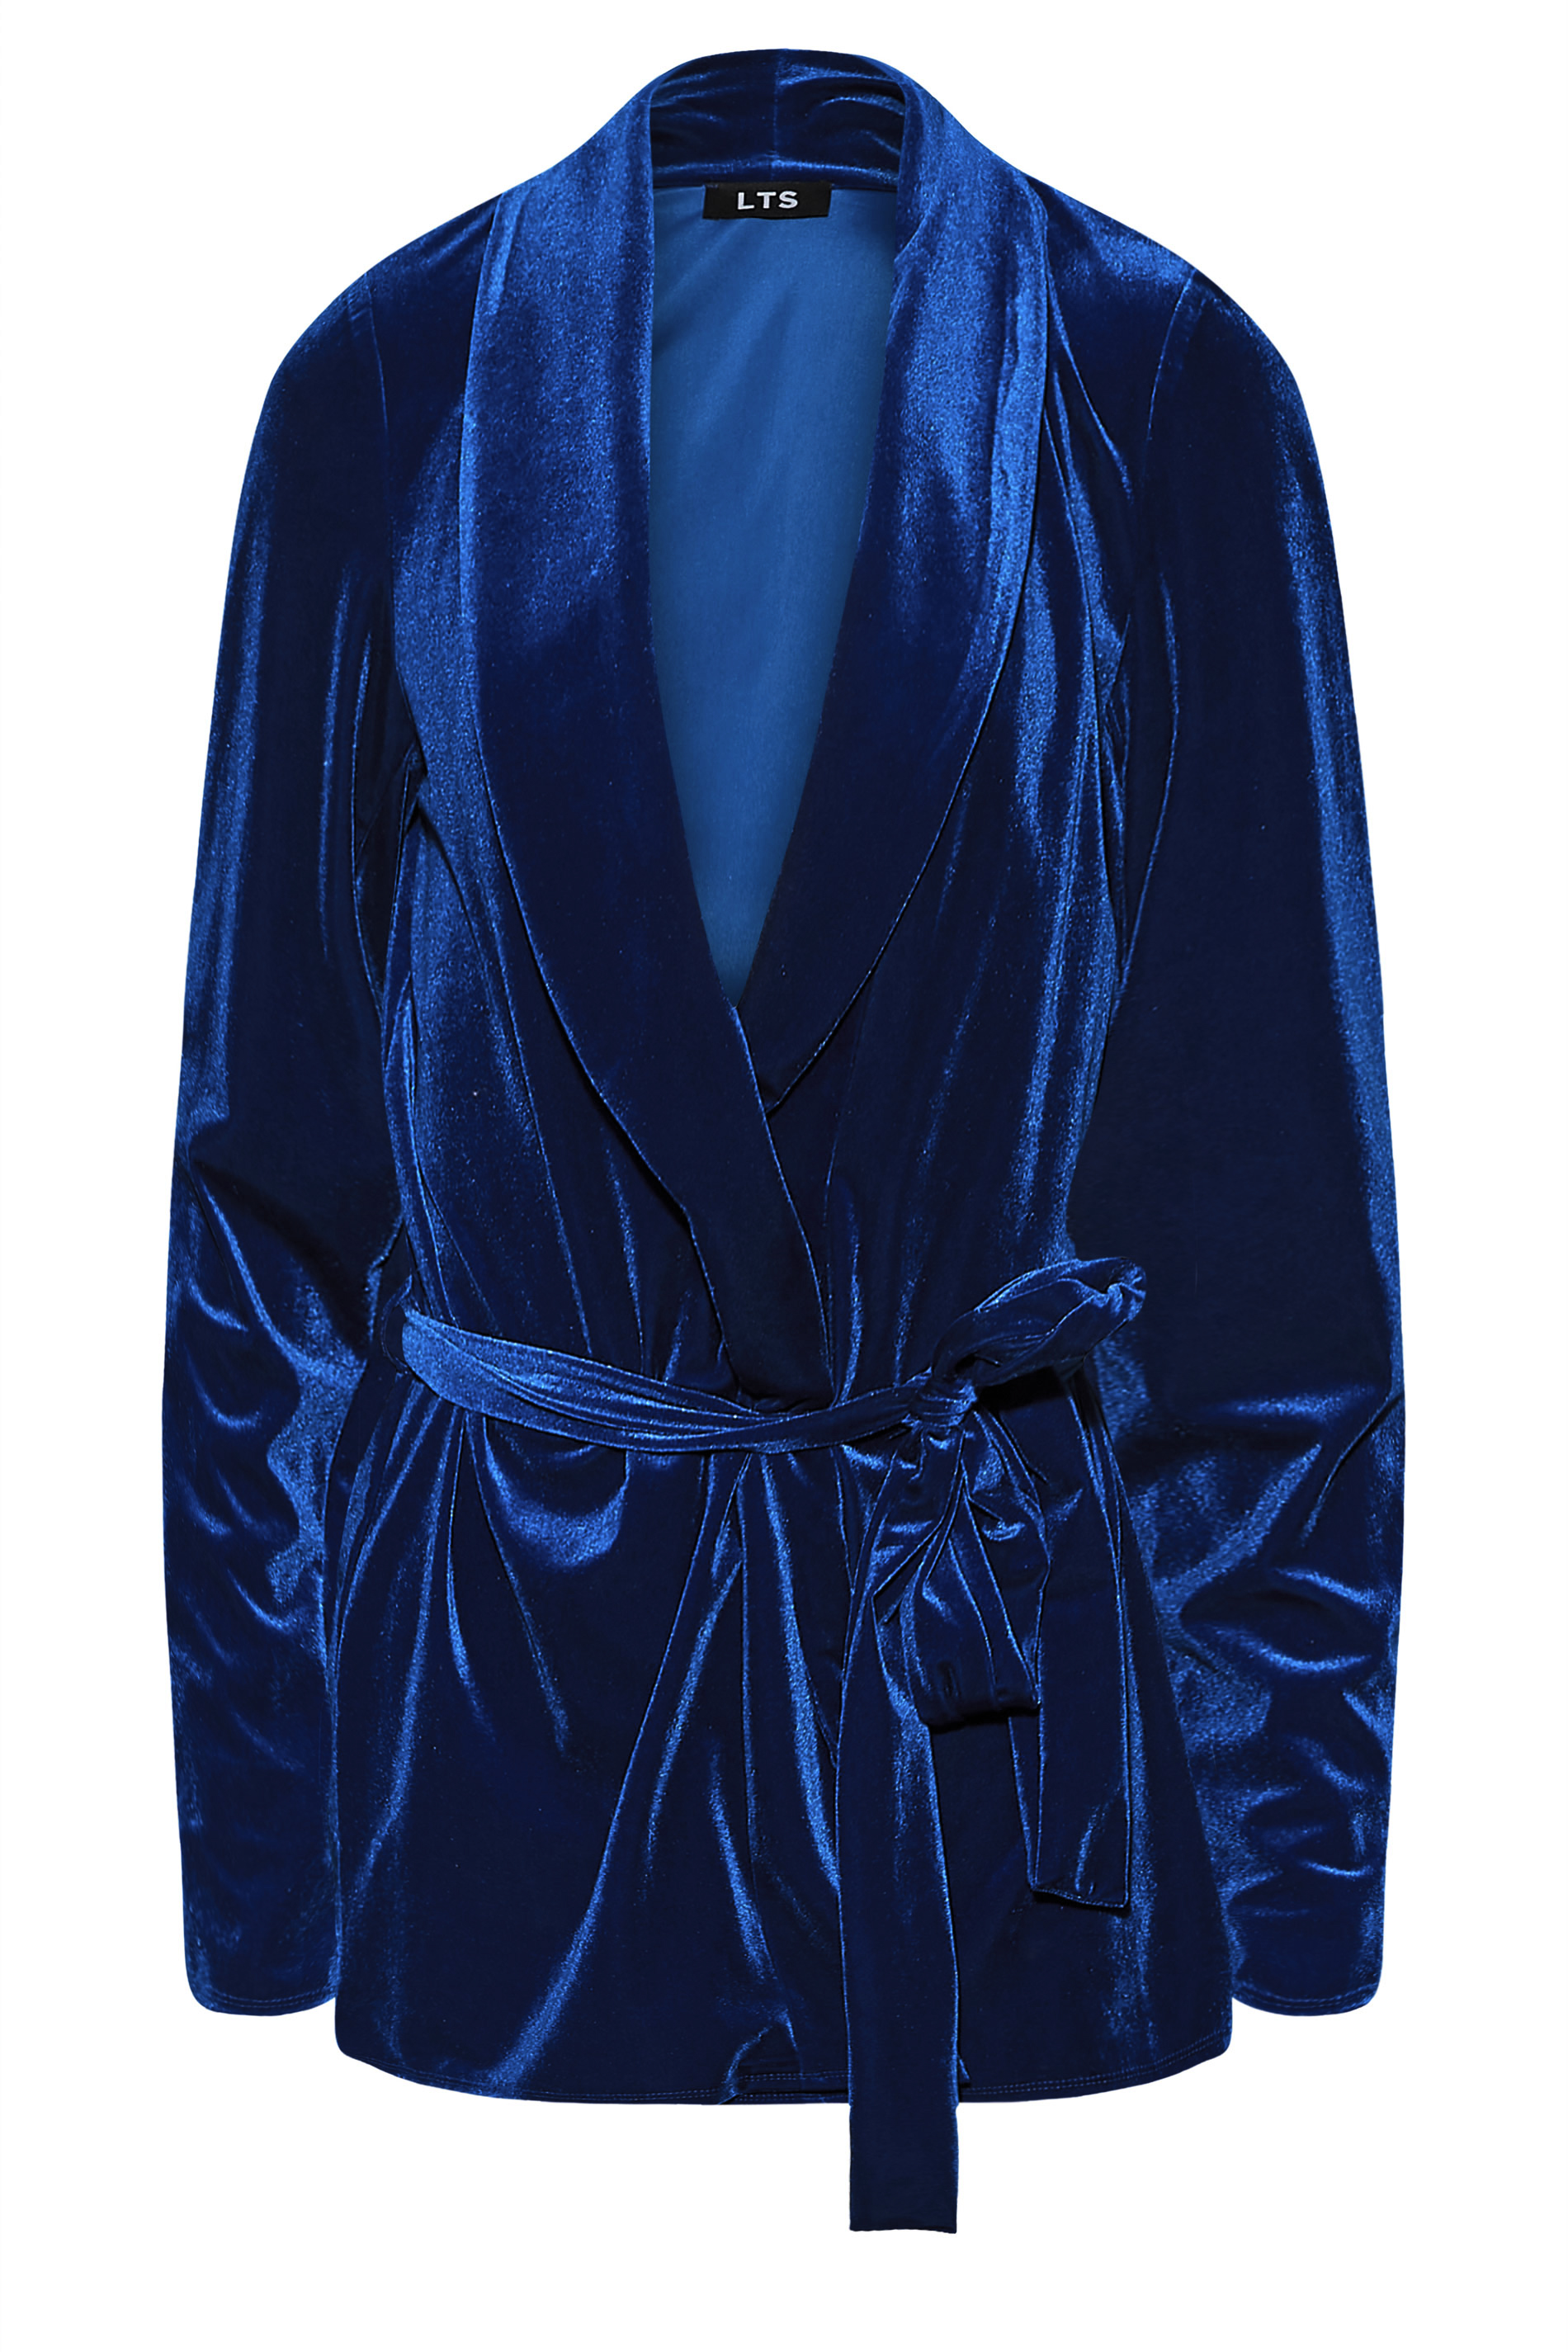 LTS Tall Women's Bright Blue Velvet Belted Blazer | Long Tall Sally 2